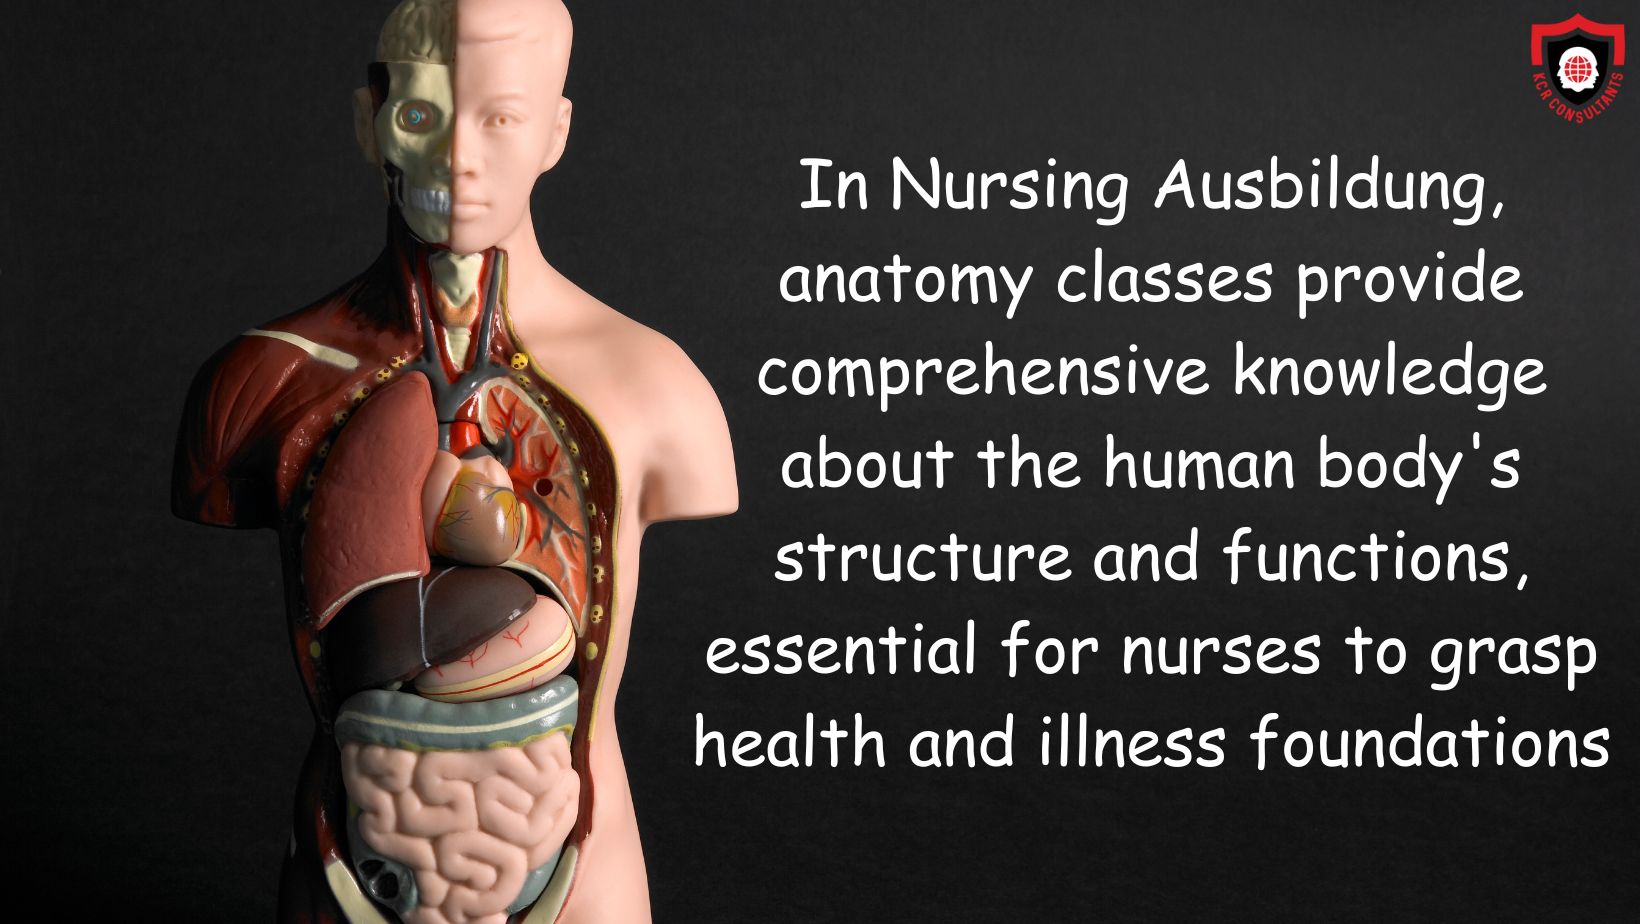 Nursing Ausbildung in Germany - KCR CONSULTANTS - Anatomy classes